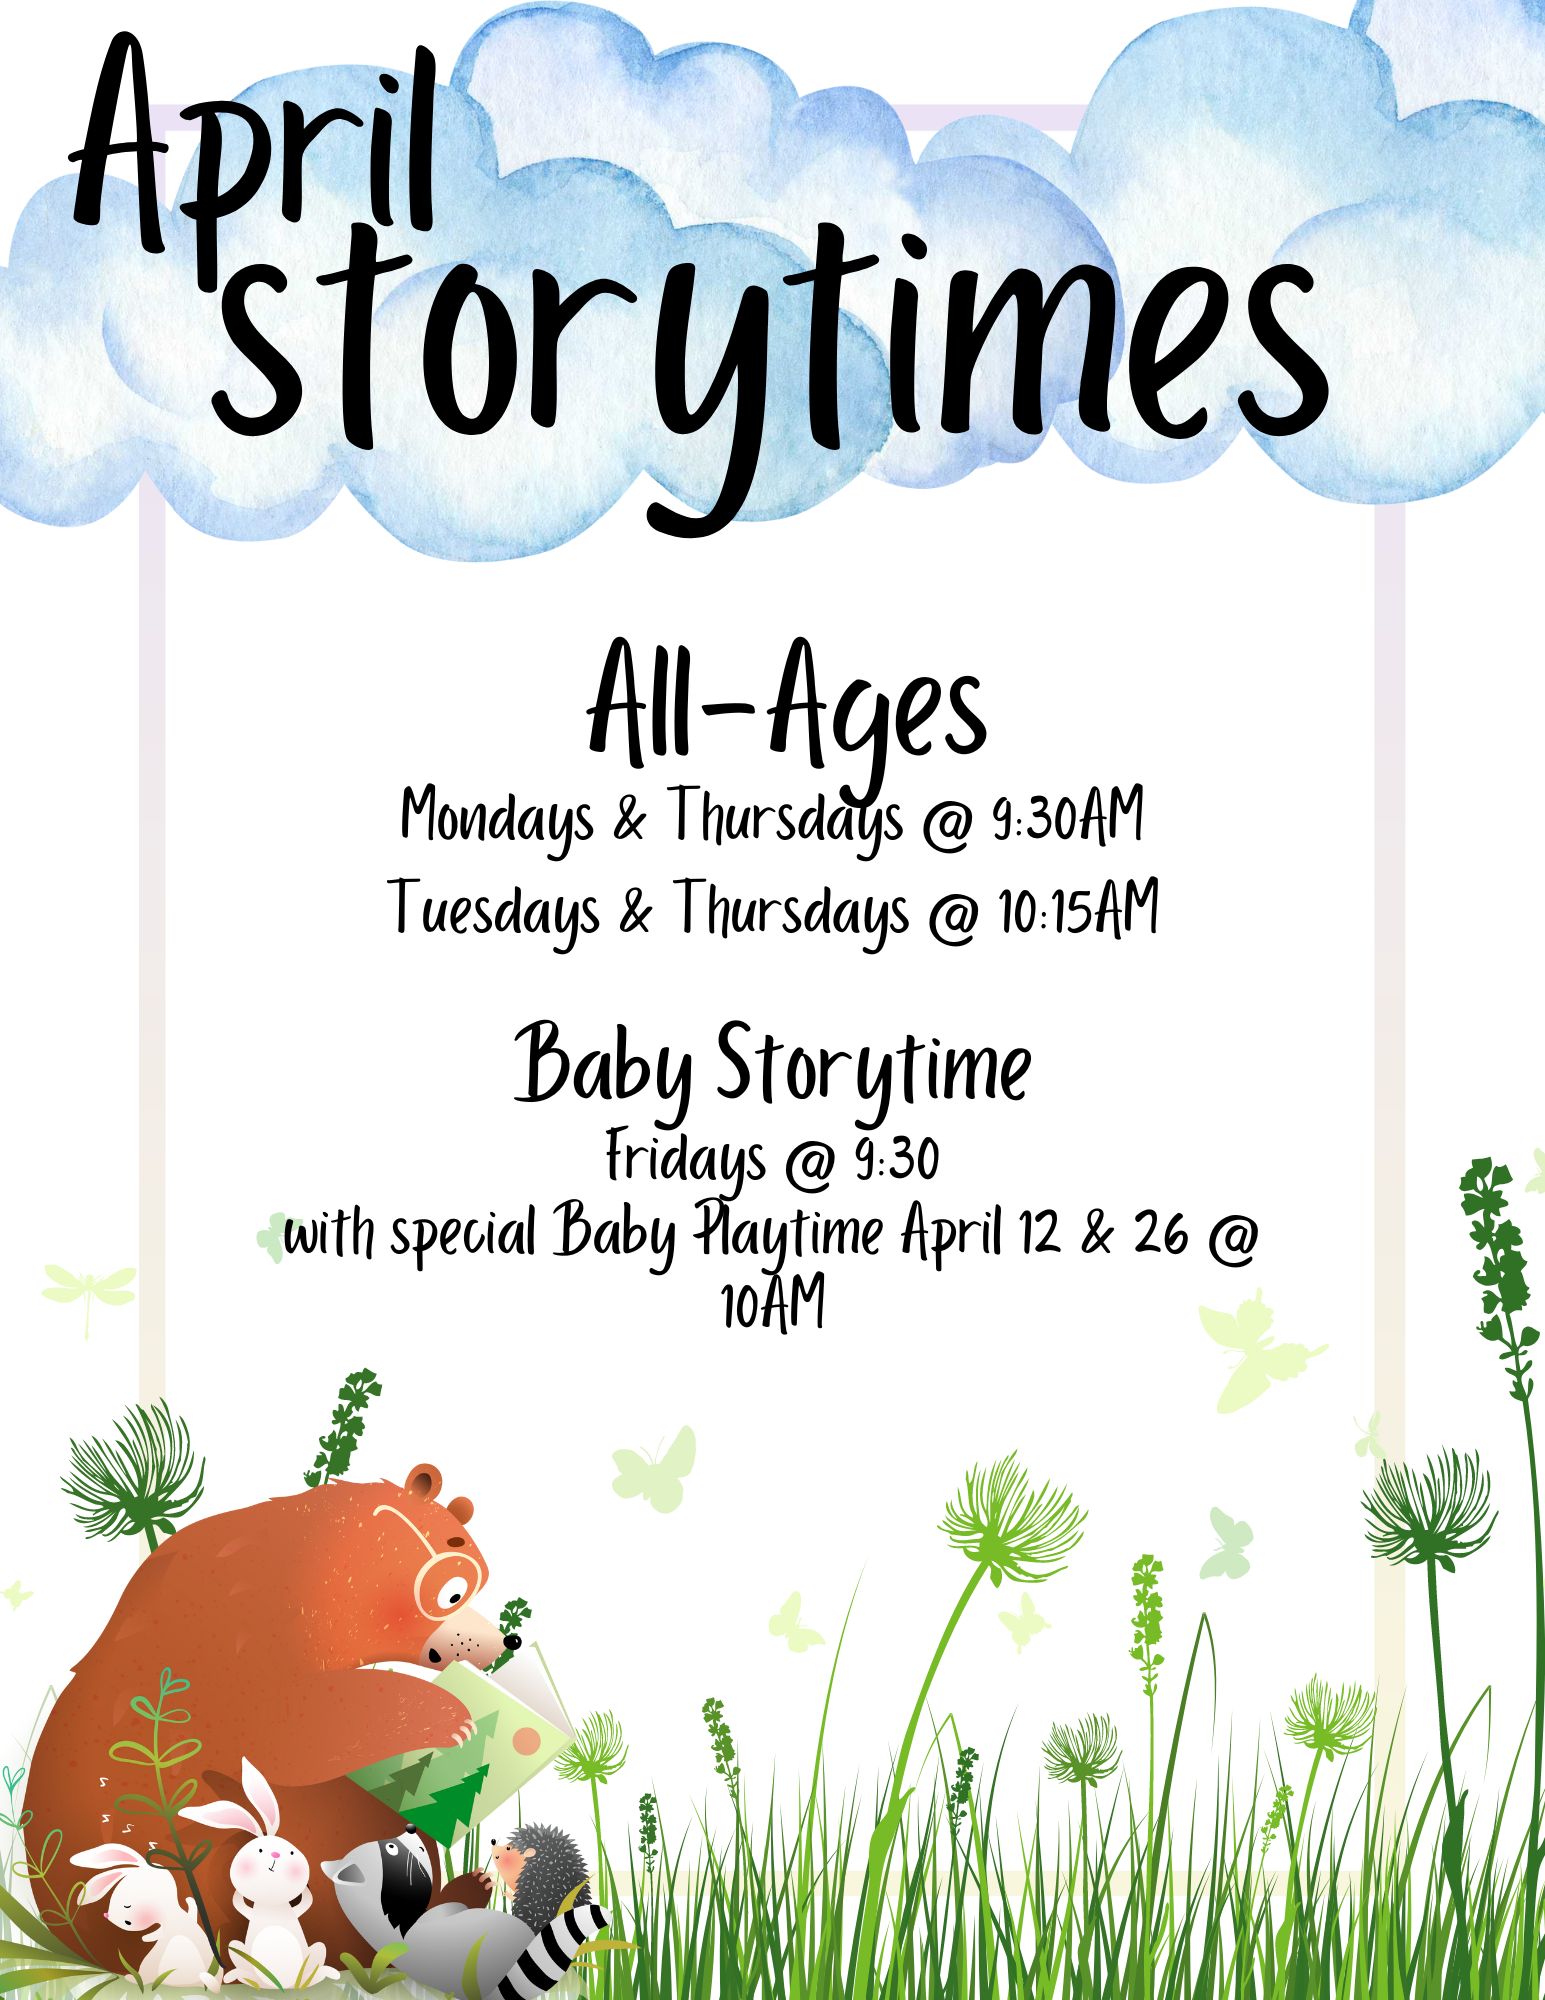 April storytimes flyer